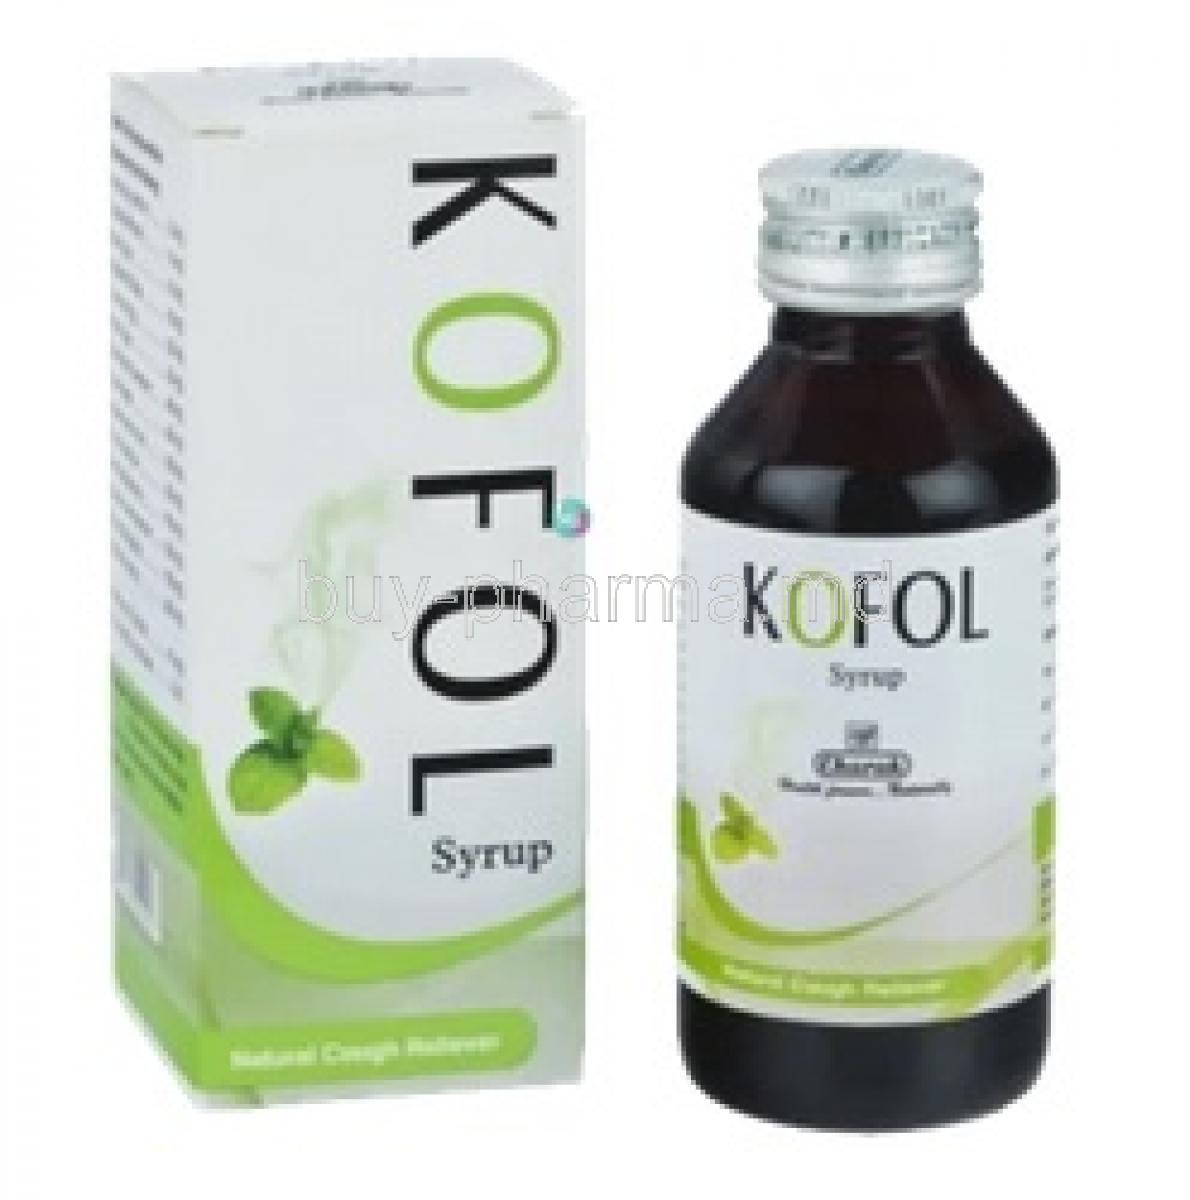 Kofol Syrup box and bottle